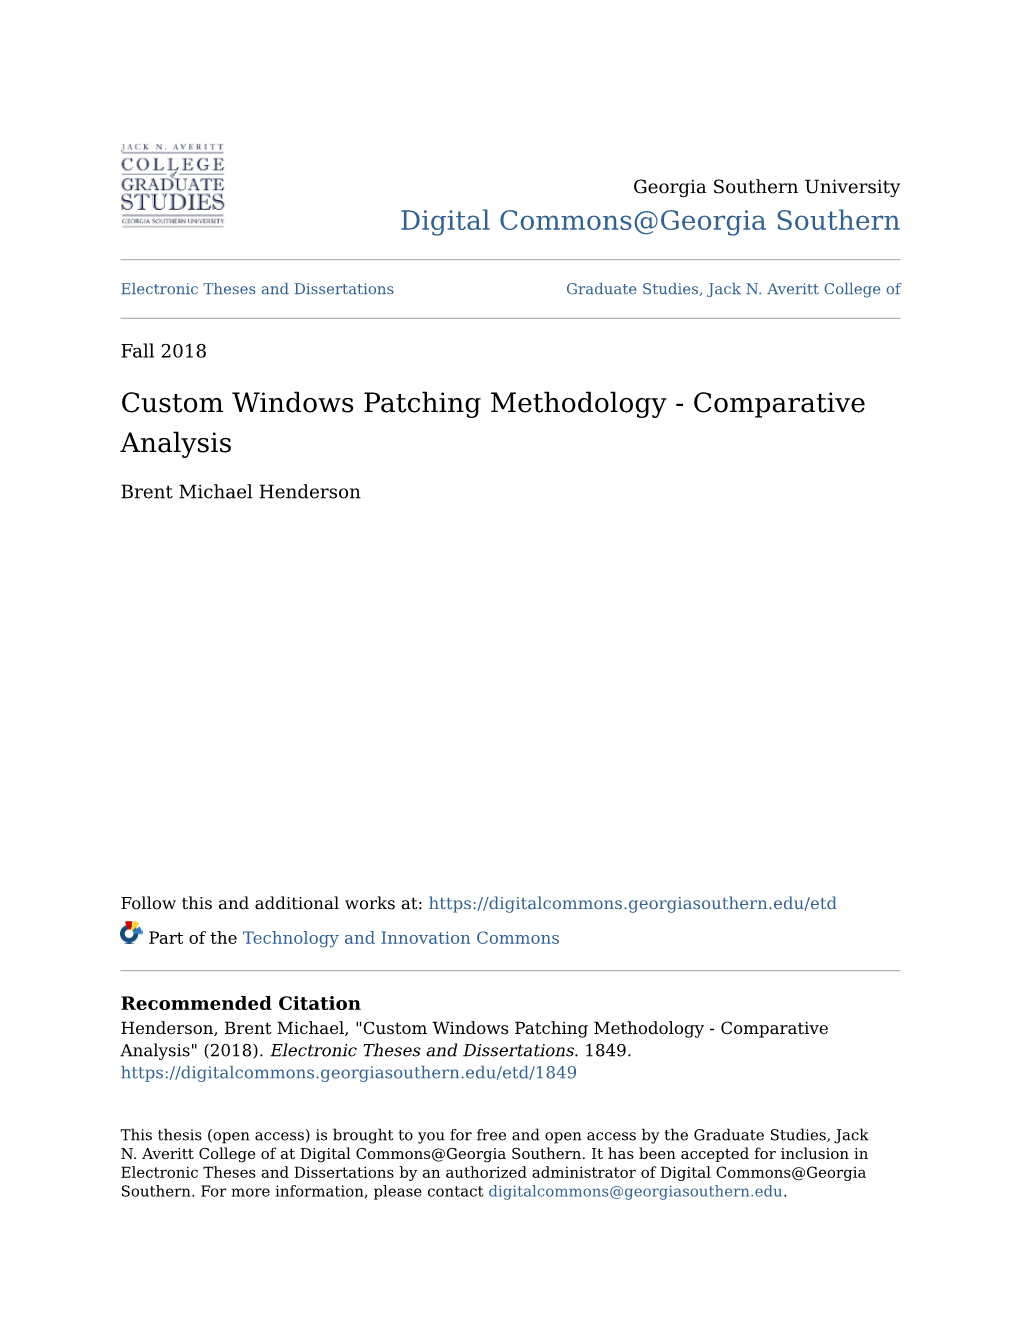 Custom Windows Patching Methodology - Comparative Analysis